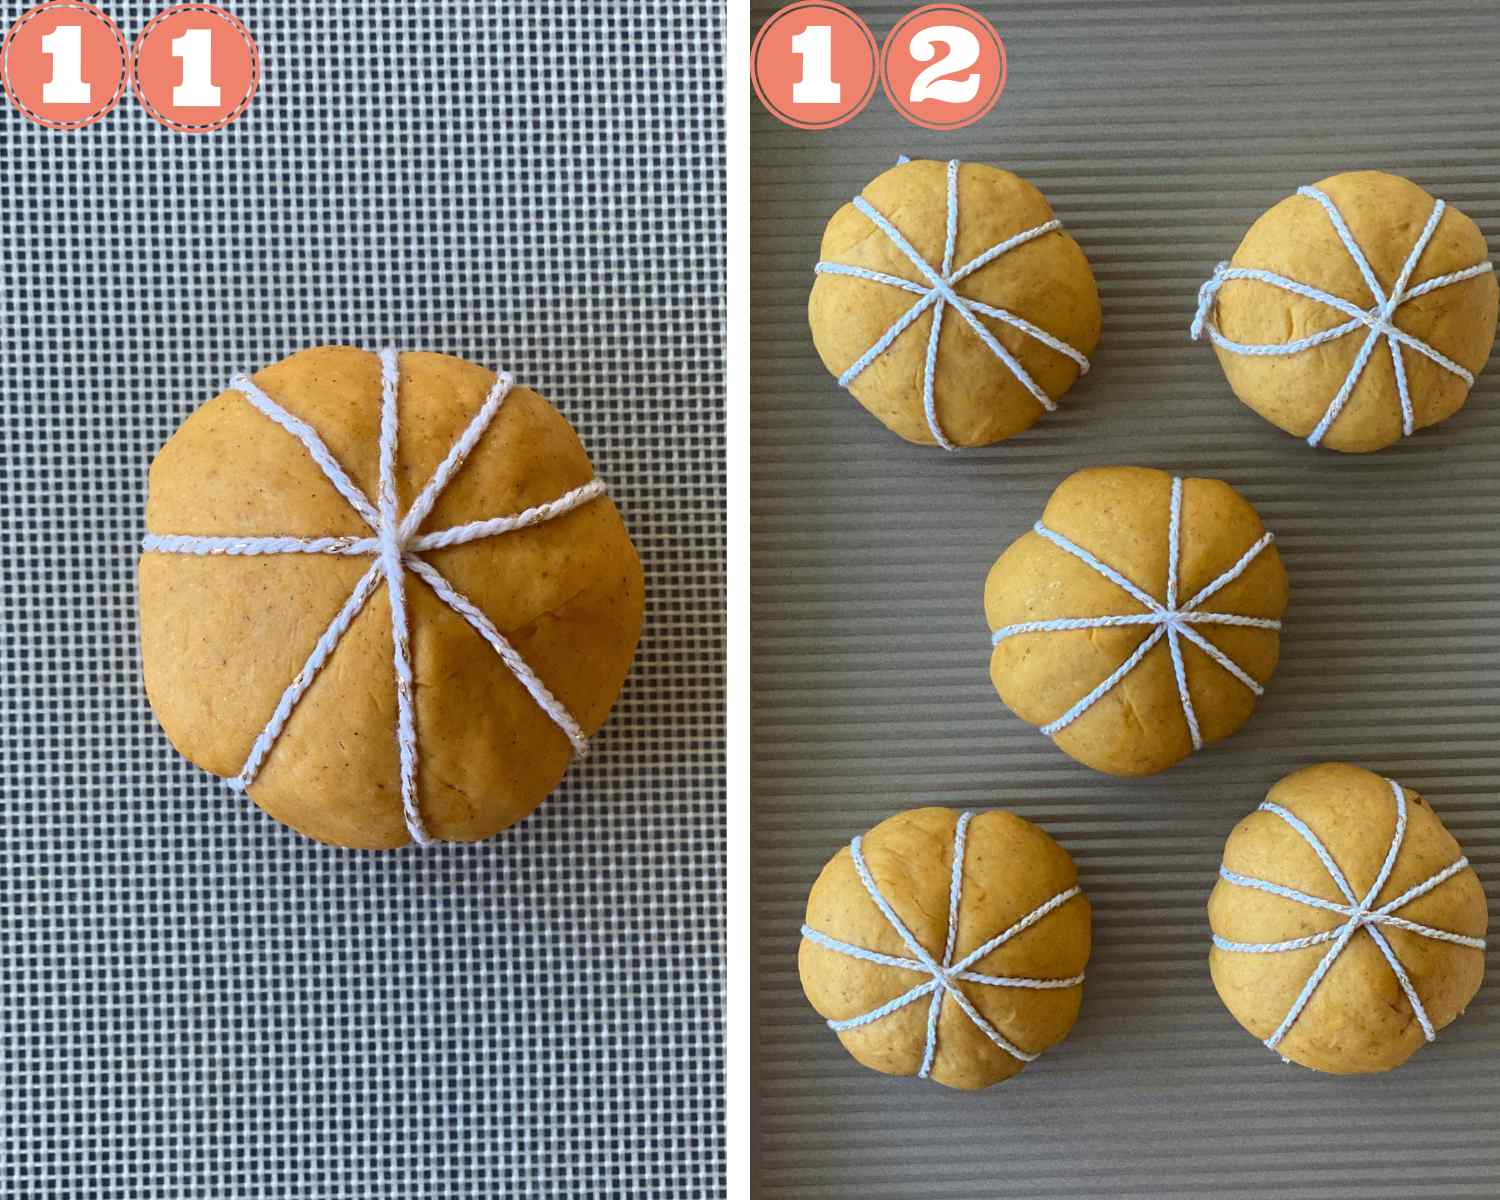 Collage steps to make Vegan Pumpkin Rolls; shaping the dough balls into pumpkins. 